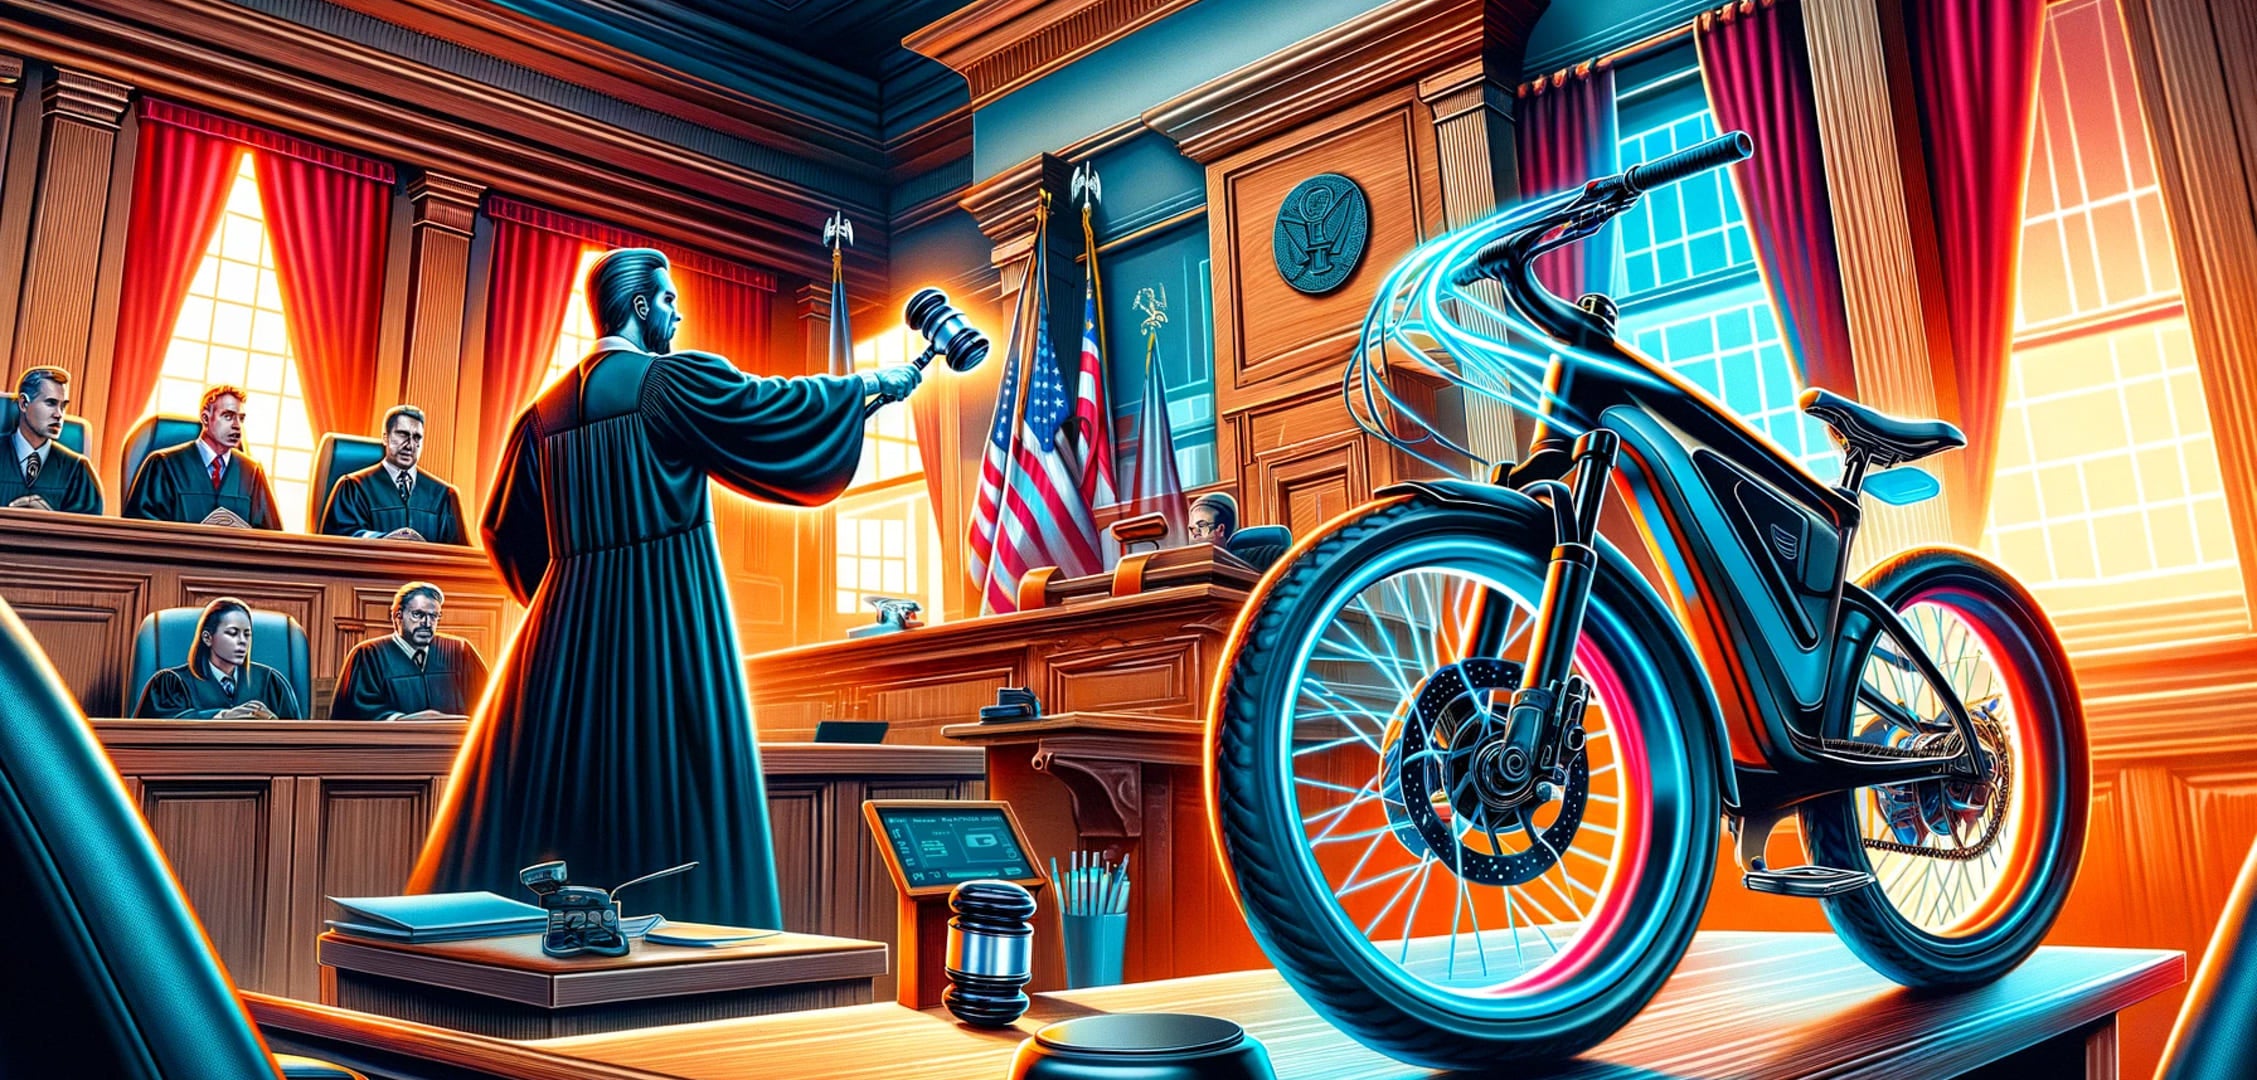 electric bike judge courtroom